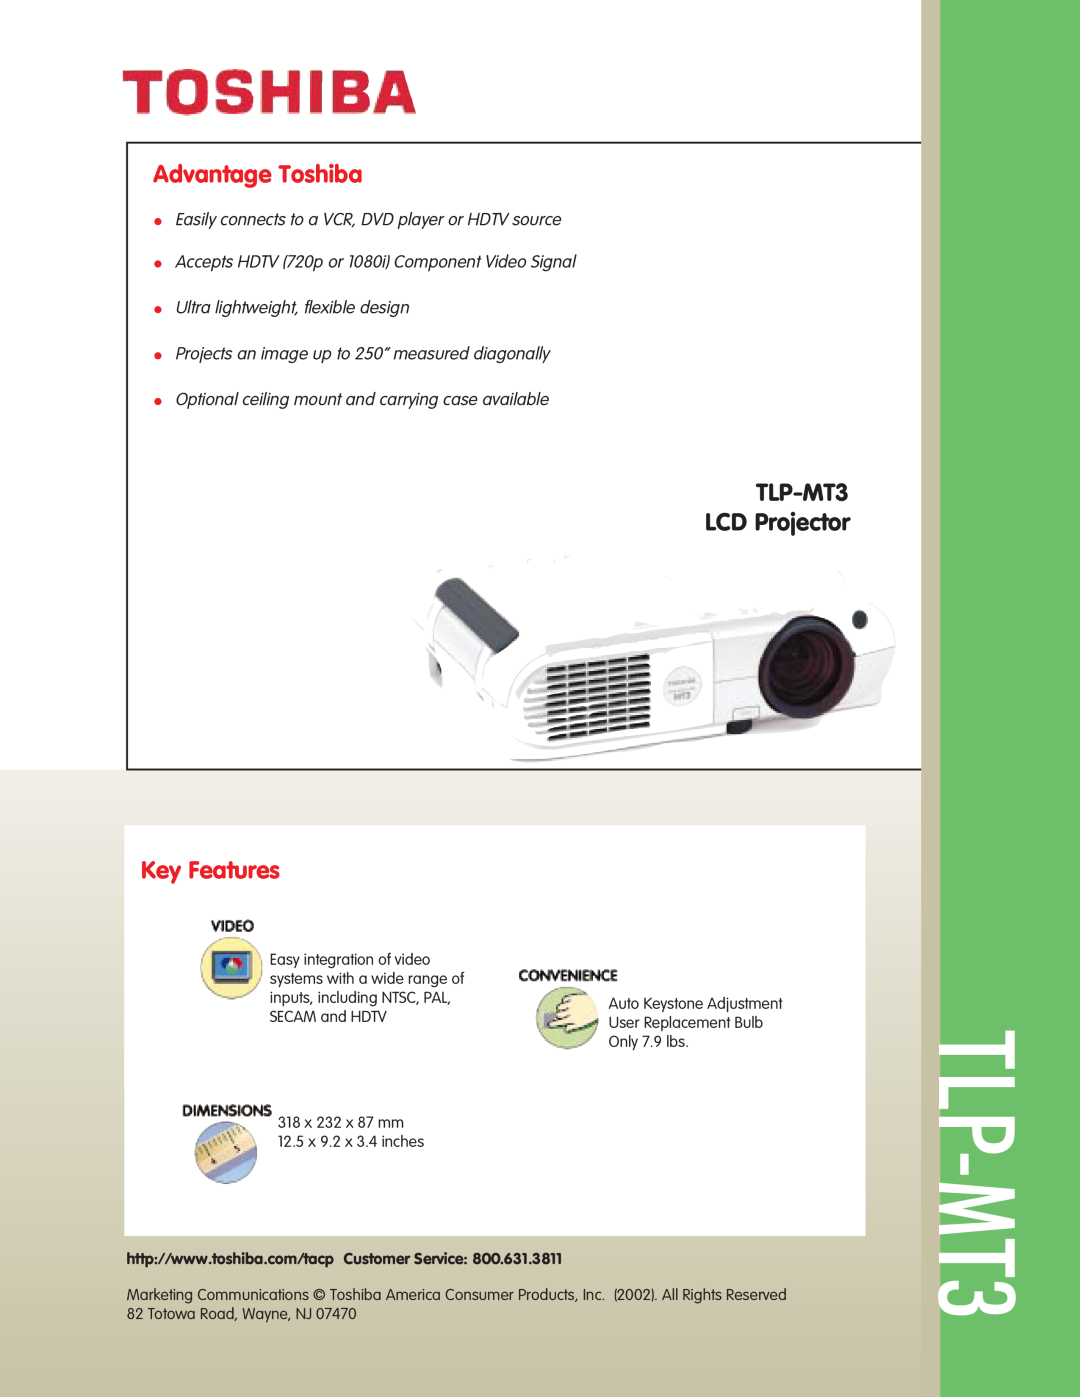 Toshiba manual Advantage Toshiba, Key Features, TLP-MT3 LCD Projector 